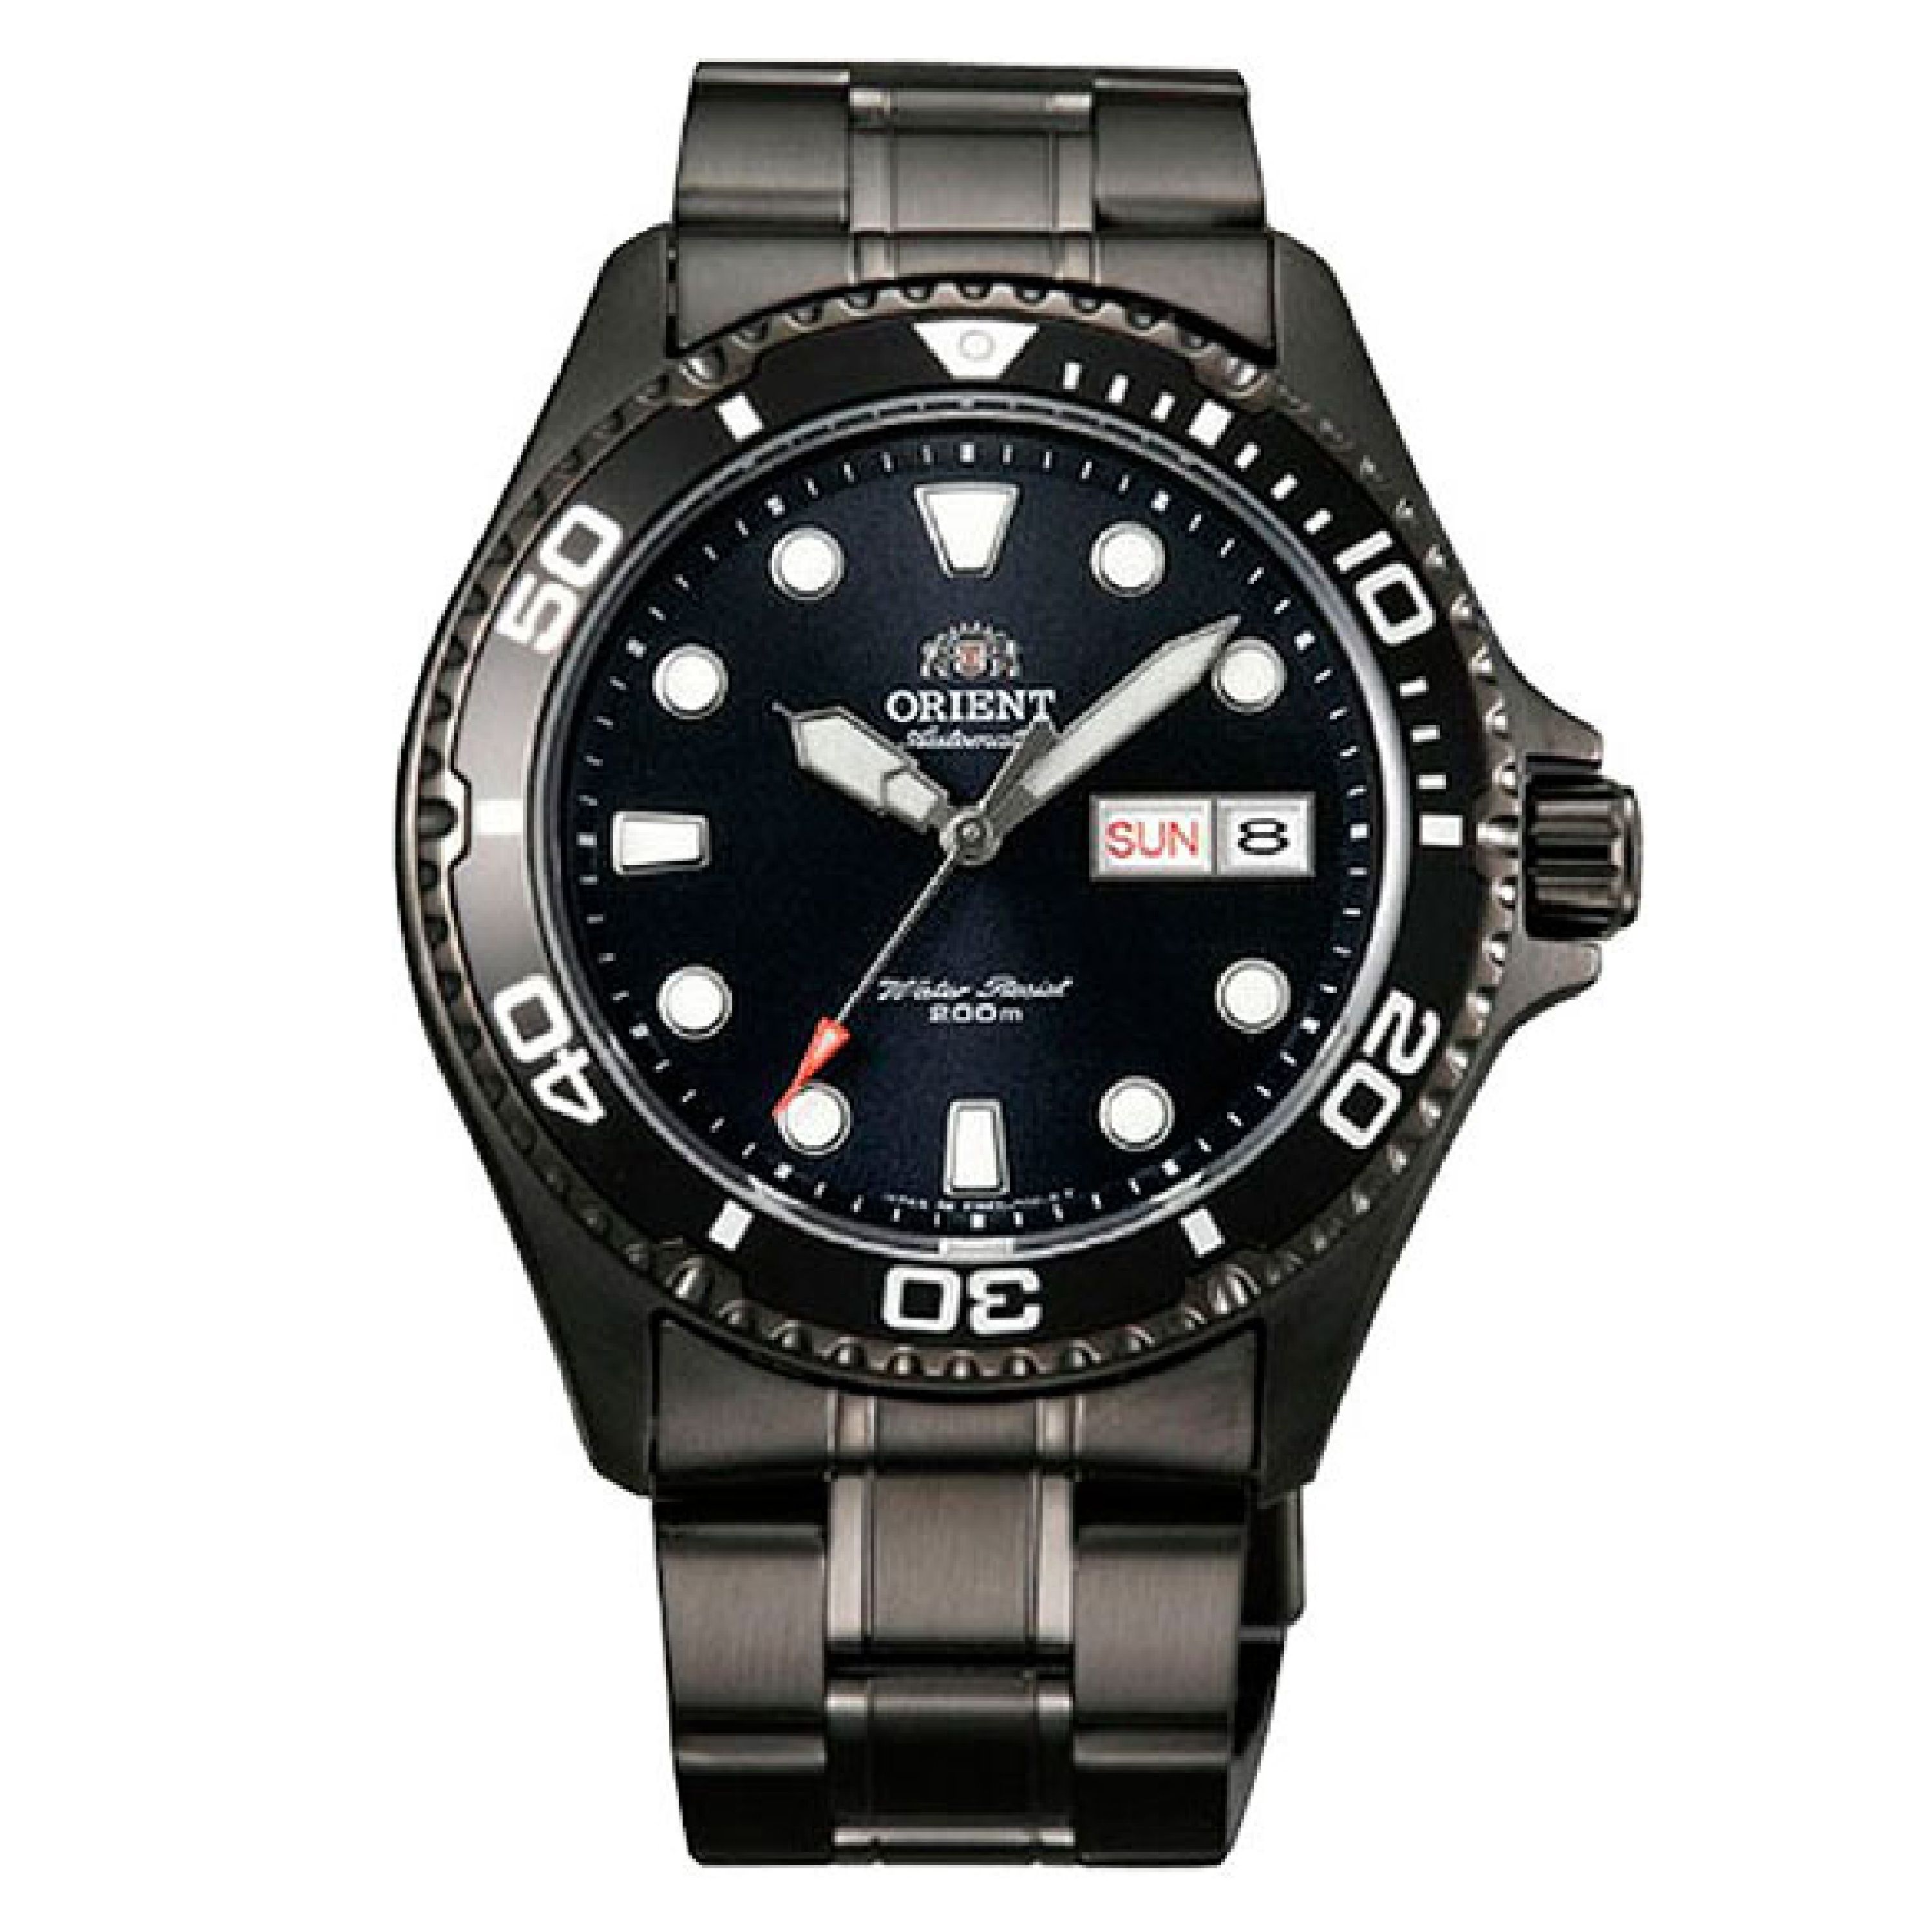 Наручные часы automatic. Orient aa02003b. Orient Diving Sports aa02003b. Наручные часы Orient aa02003b. Orient Automatic aa02003b.